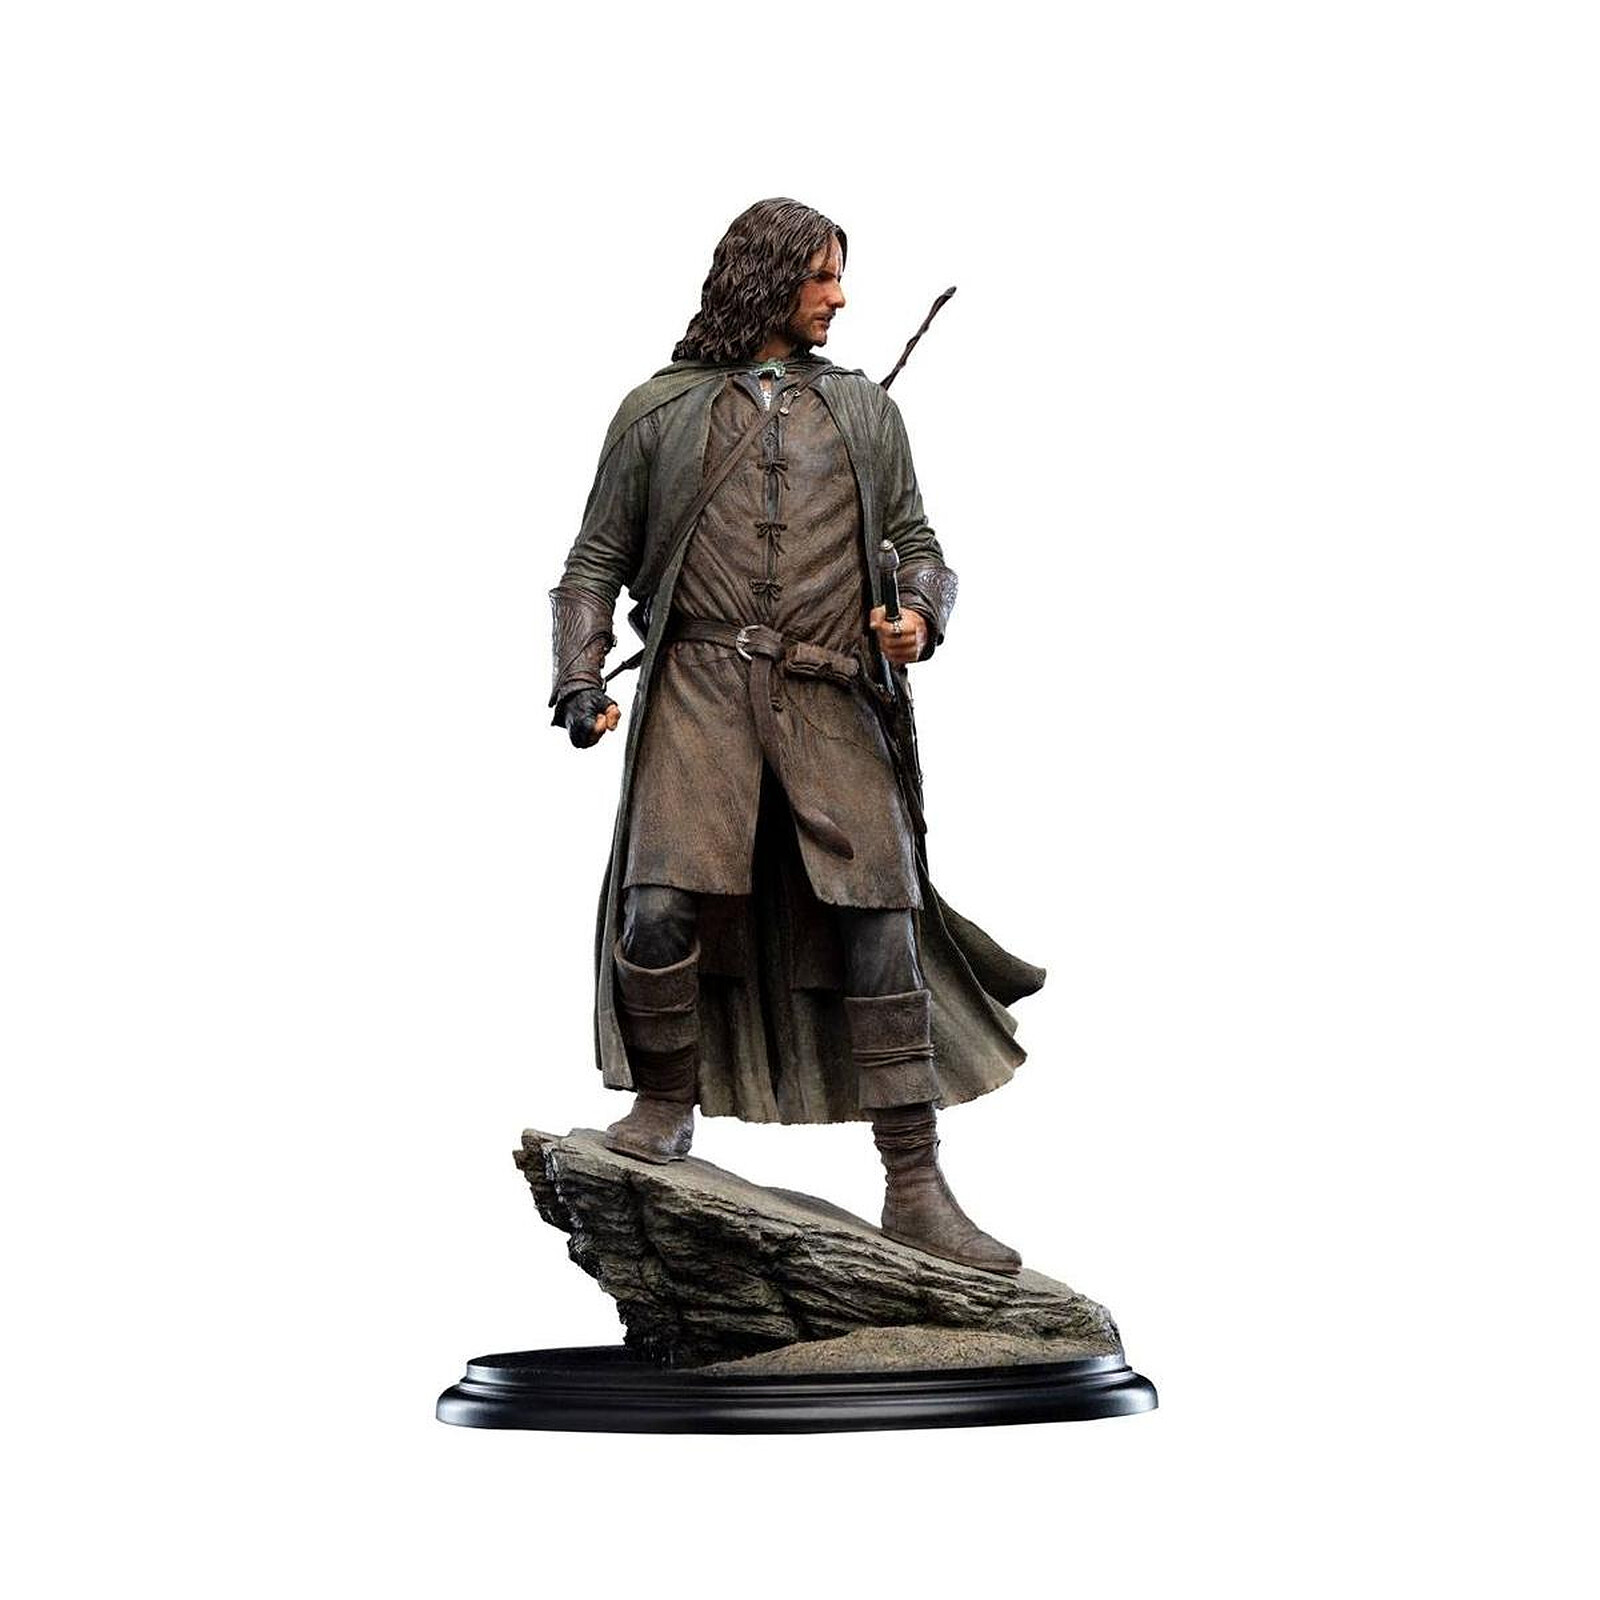 Figurine King Aragorn / Le Seigneur Des Anneaux / Funko Pop Movies